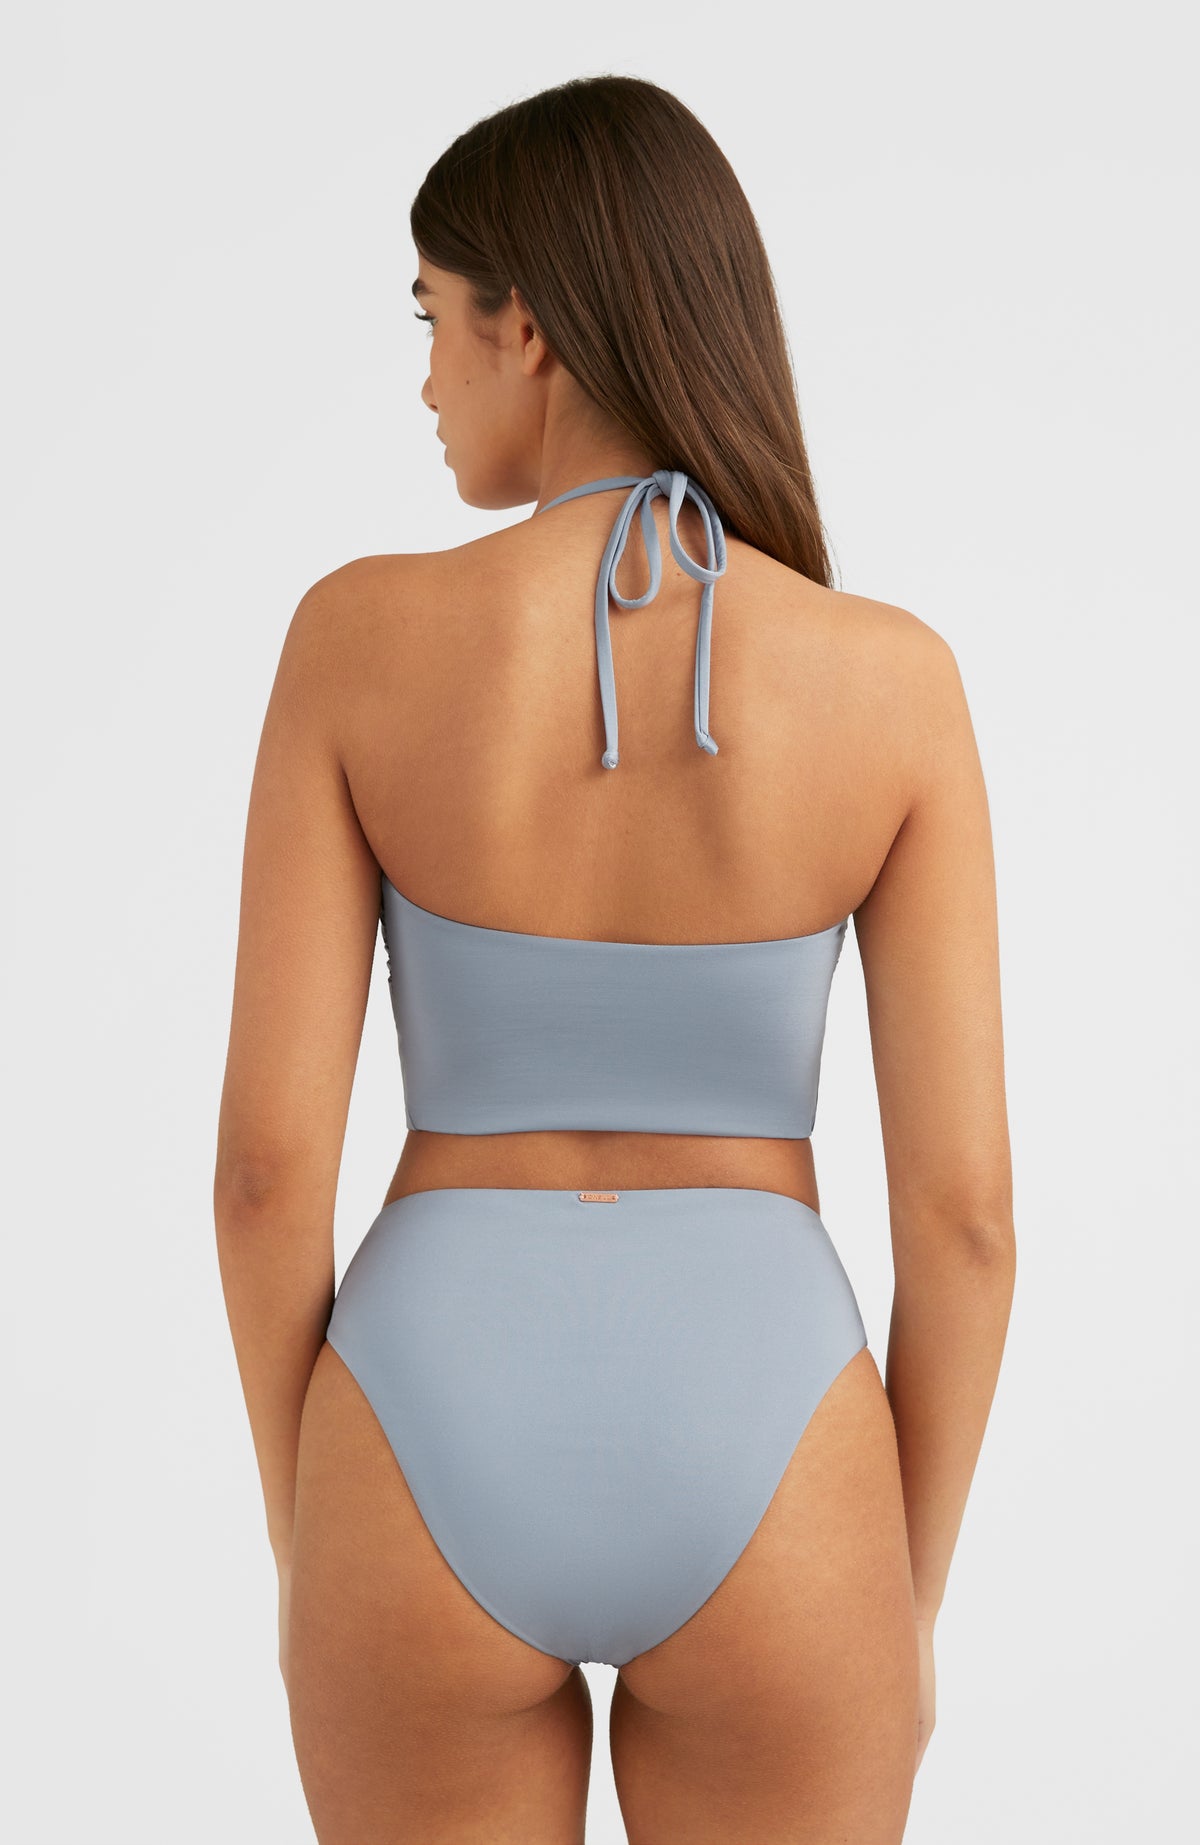 JDEFEG Womens Swim Top Large Bust Swimsuit One Set Bikini Contrast